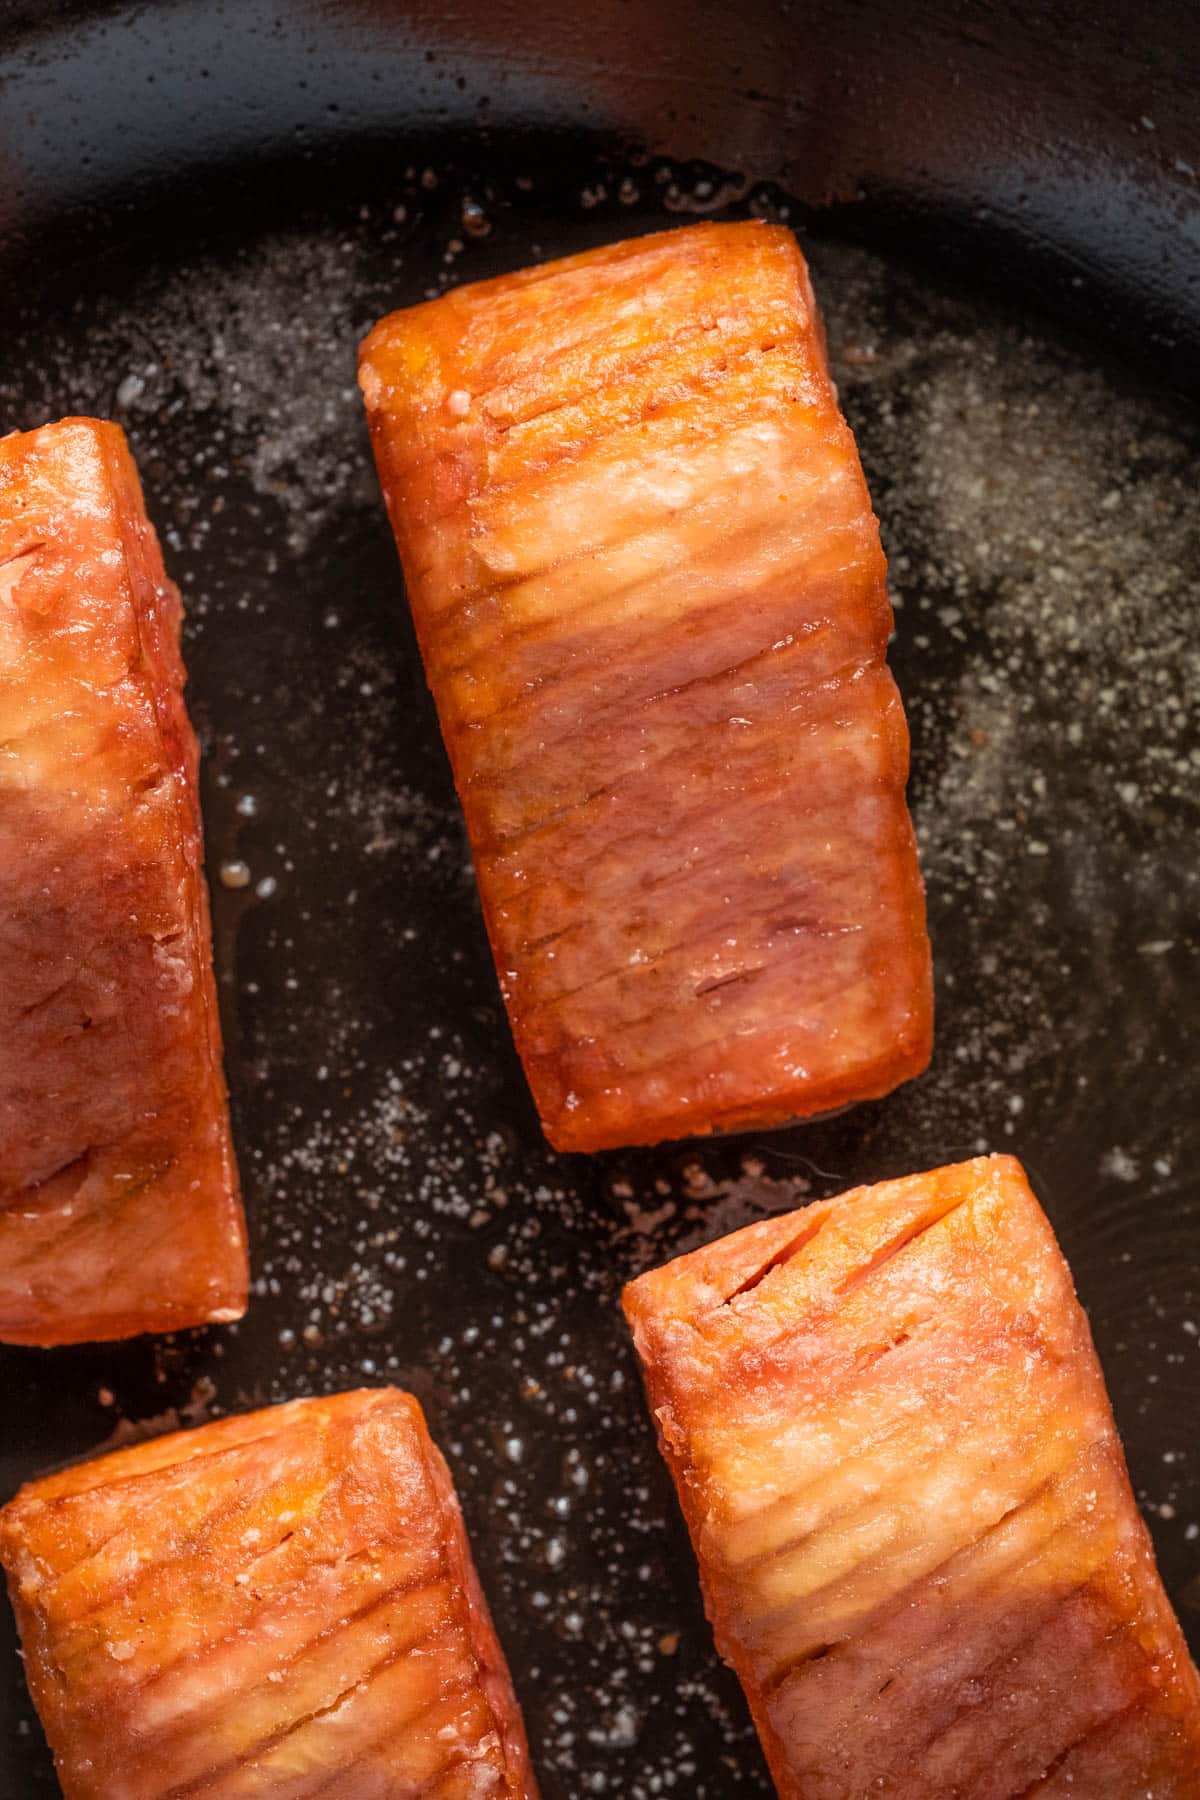 Fried vegan salmon pieces in a frying pan.